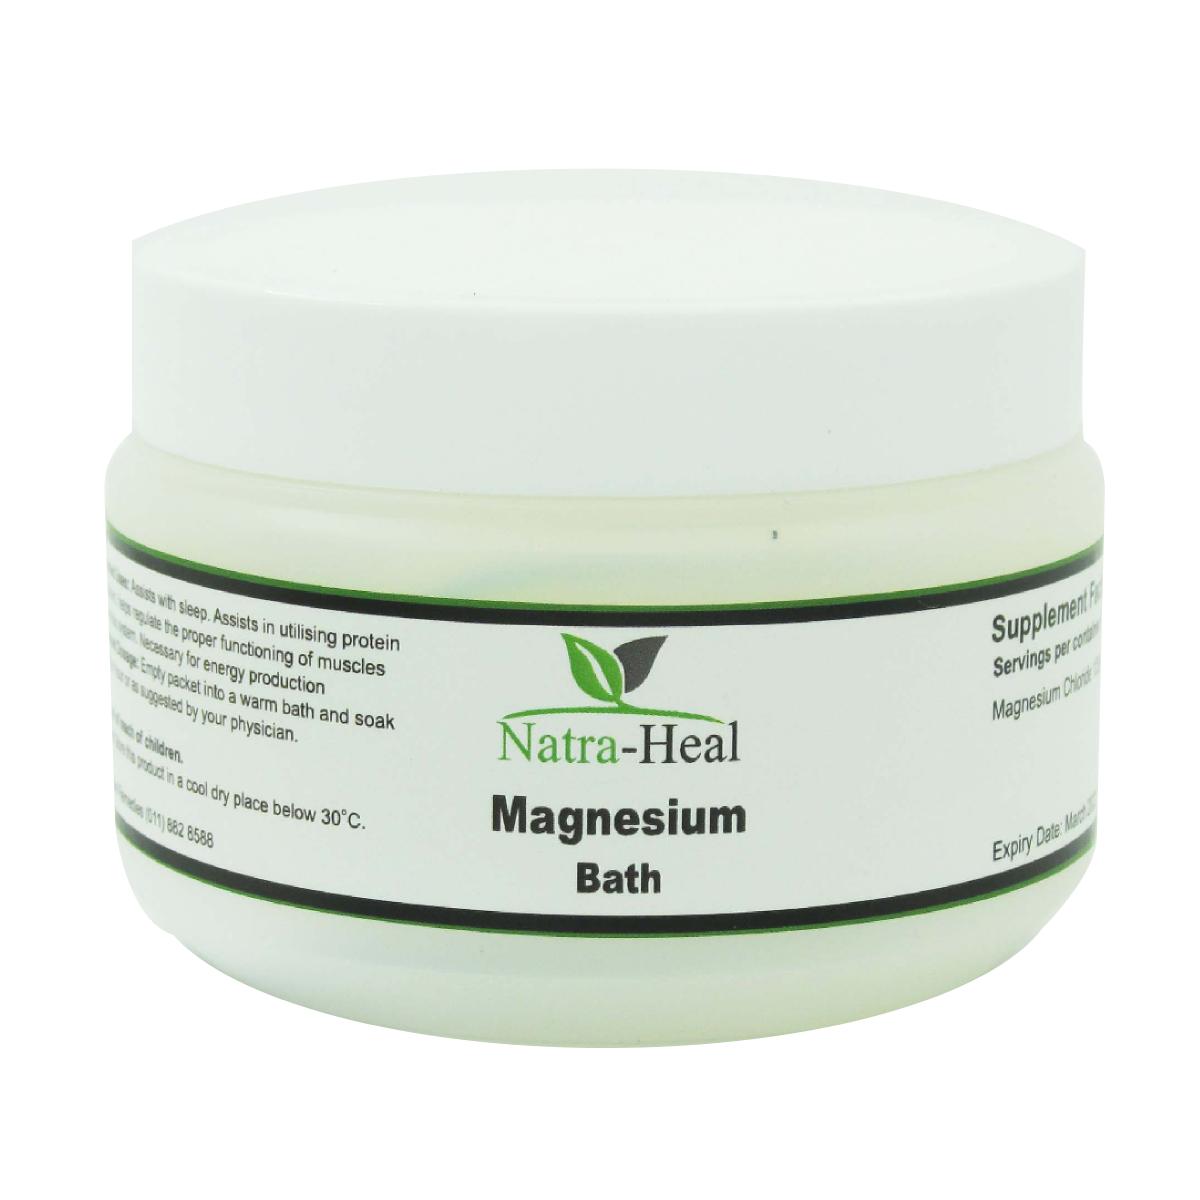 Magnesium Bath - Natra-Heal Wellness